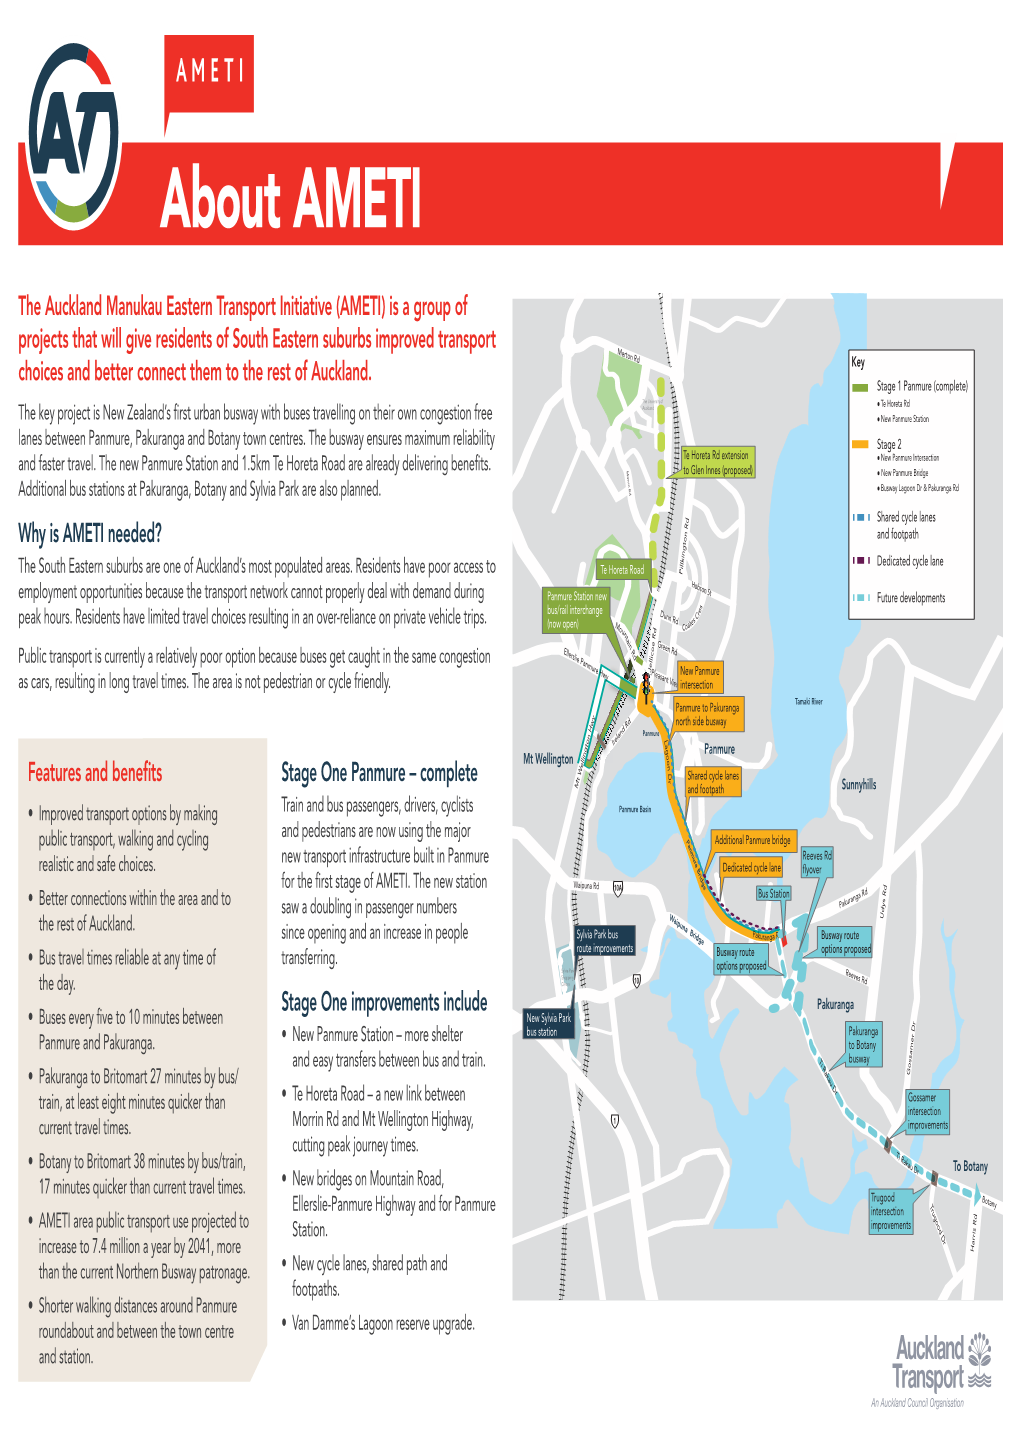 AMETI Project Timing & Pakuranga Town Centre Busway Route